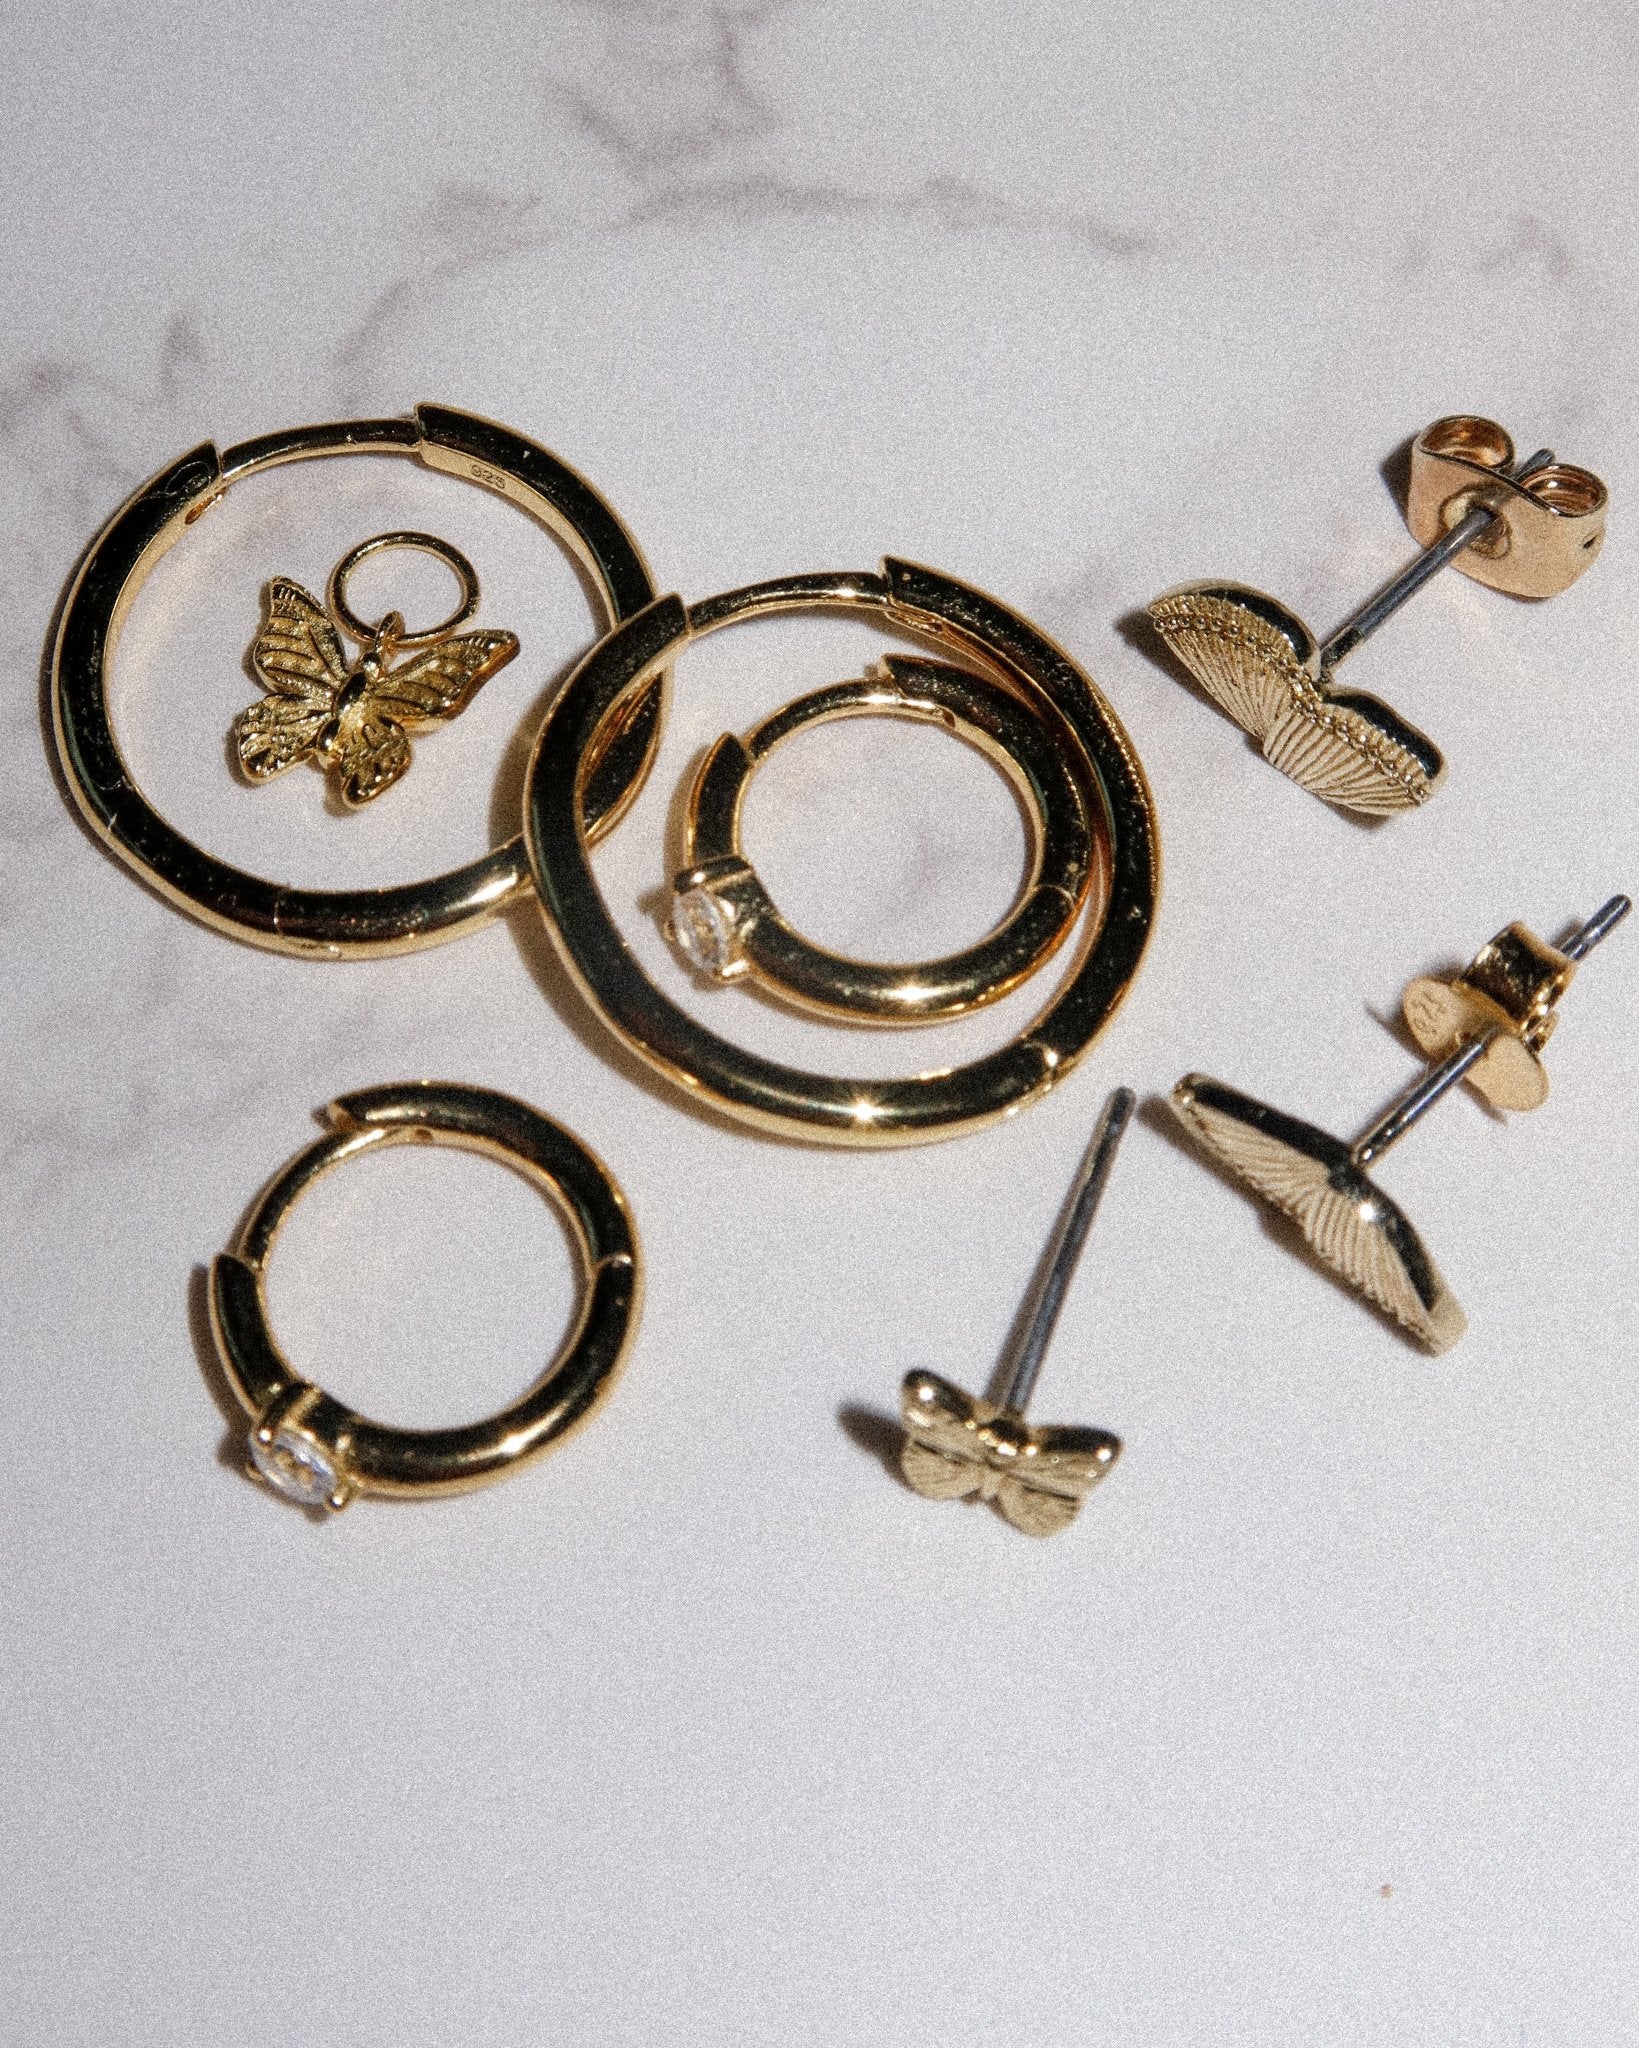 Mari earrings - five and two jewelry